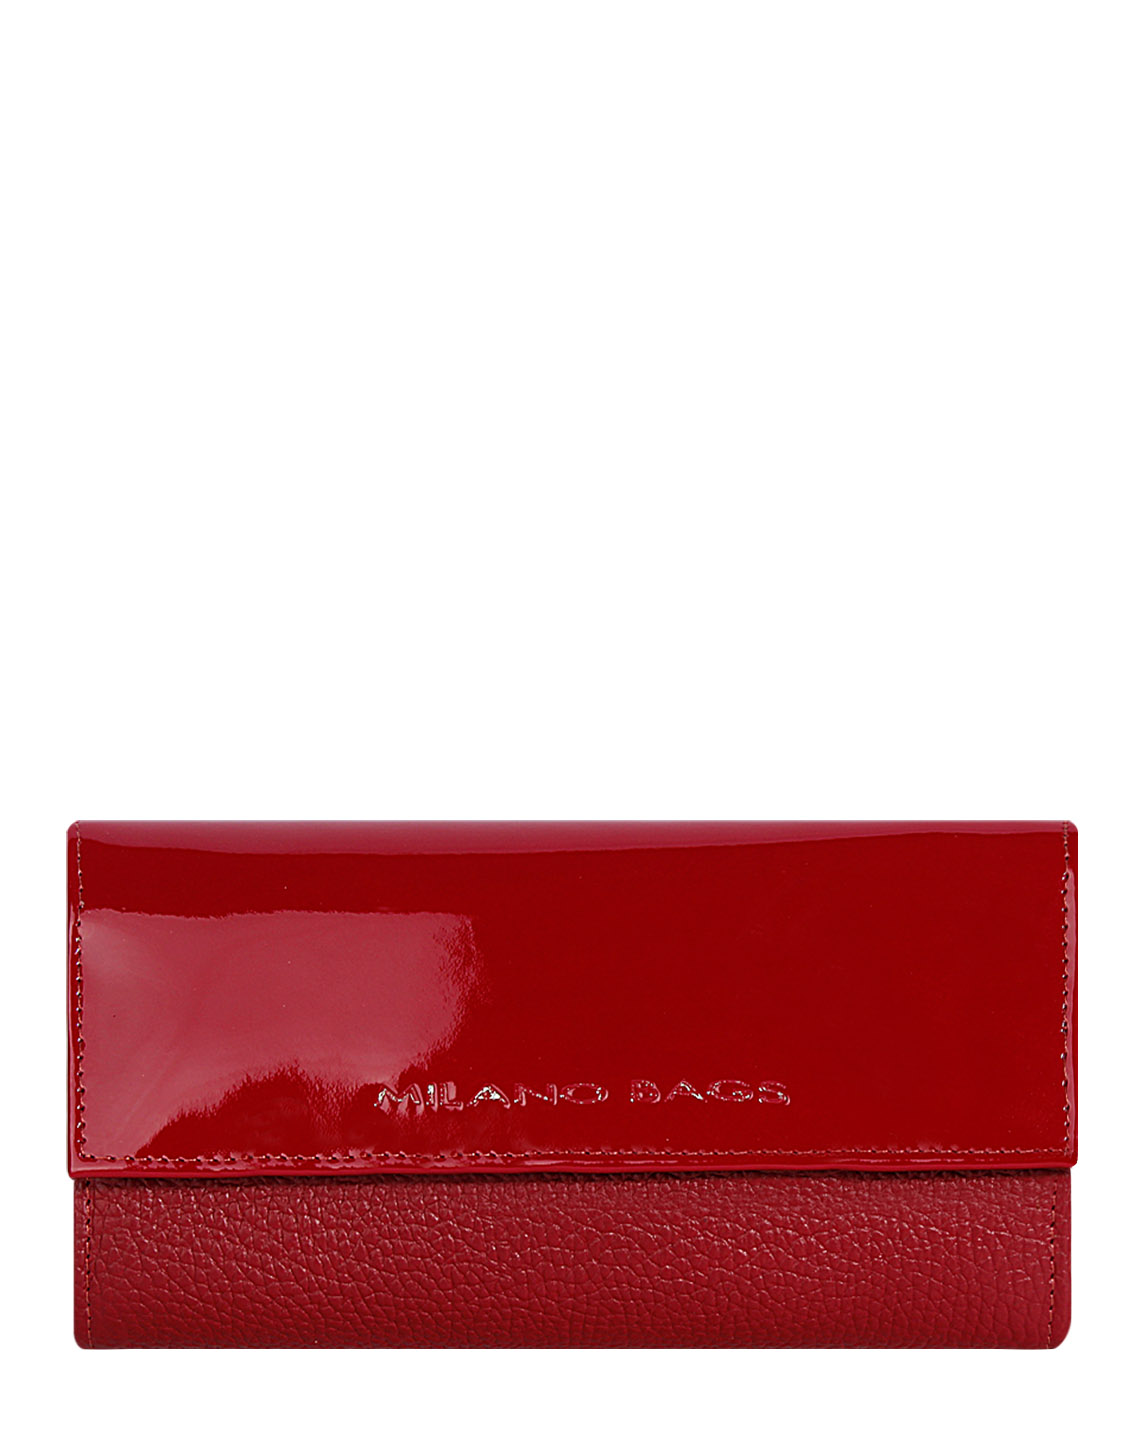 Billetera de Mujer BM-0070 Color Rojo